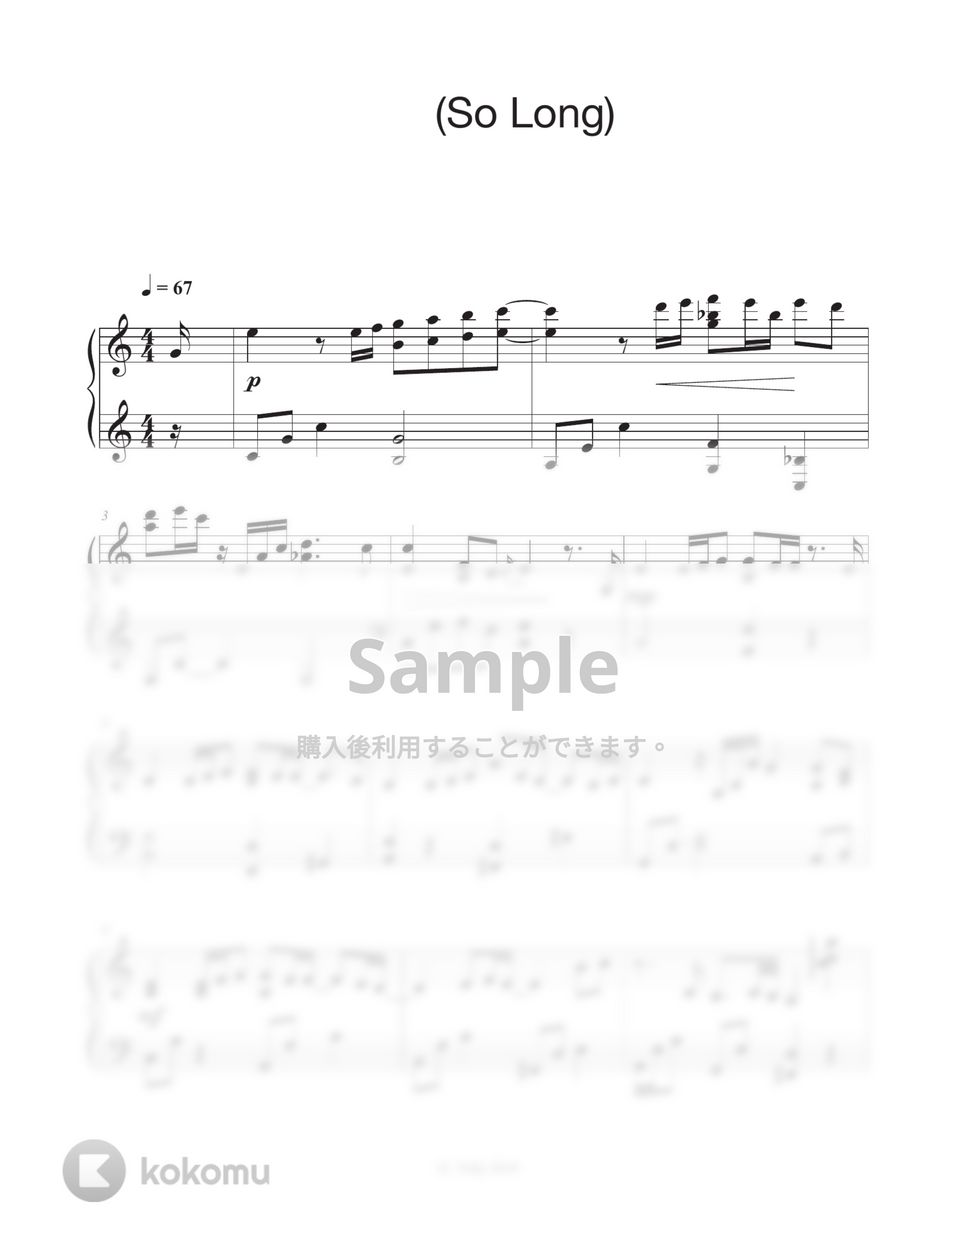 Paul Kim - So Long (안녕) (ホテルデルーナ OST) by Tully Piano